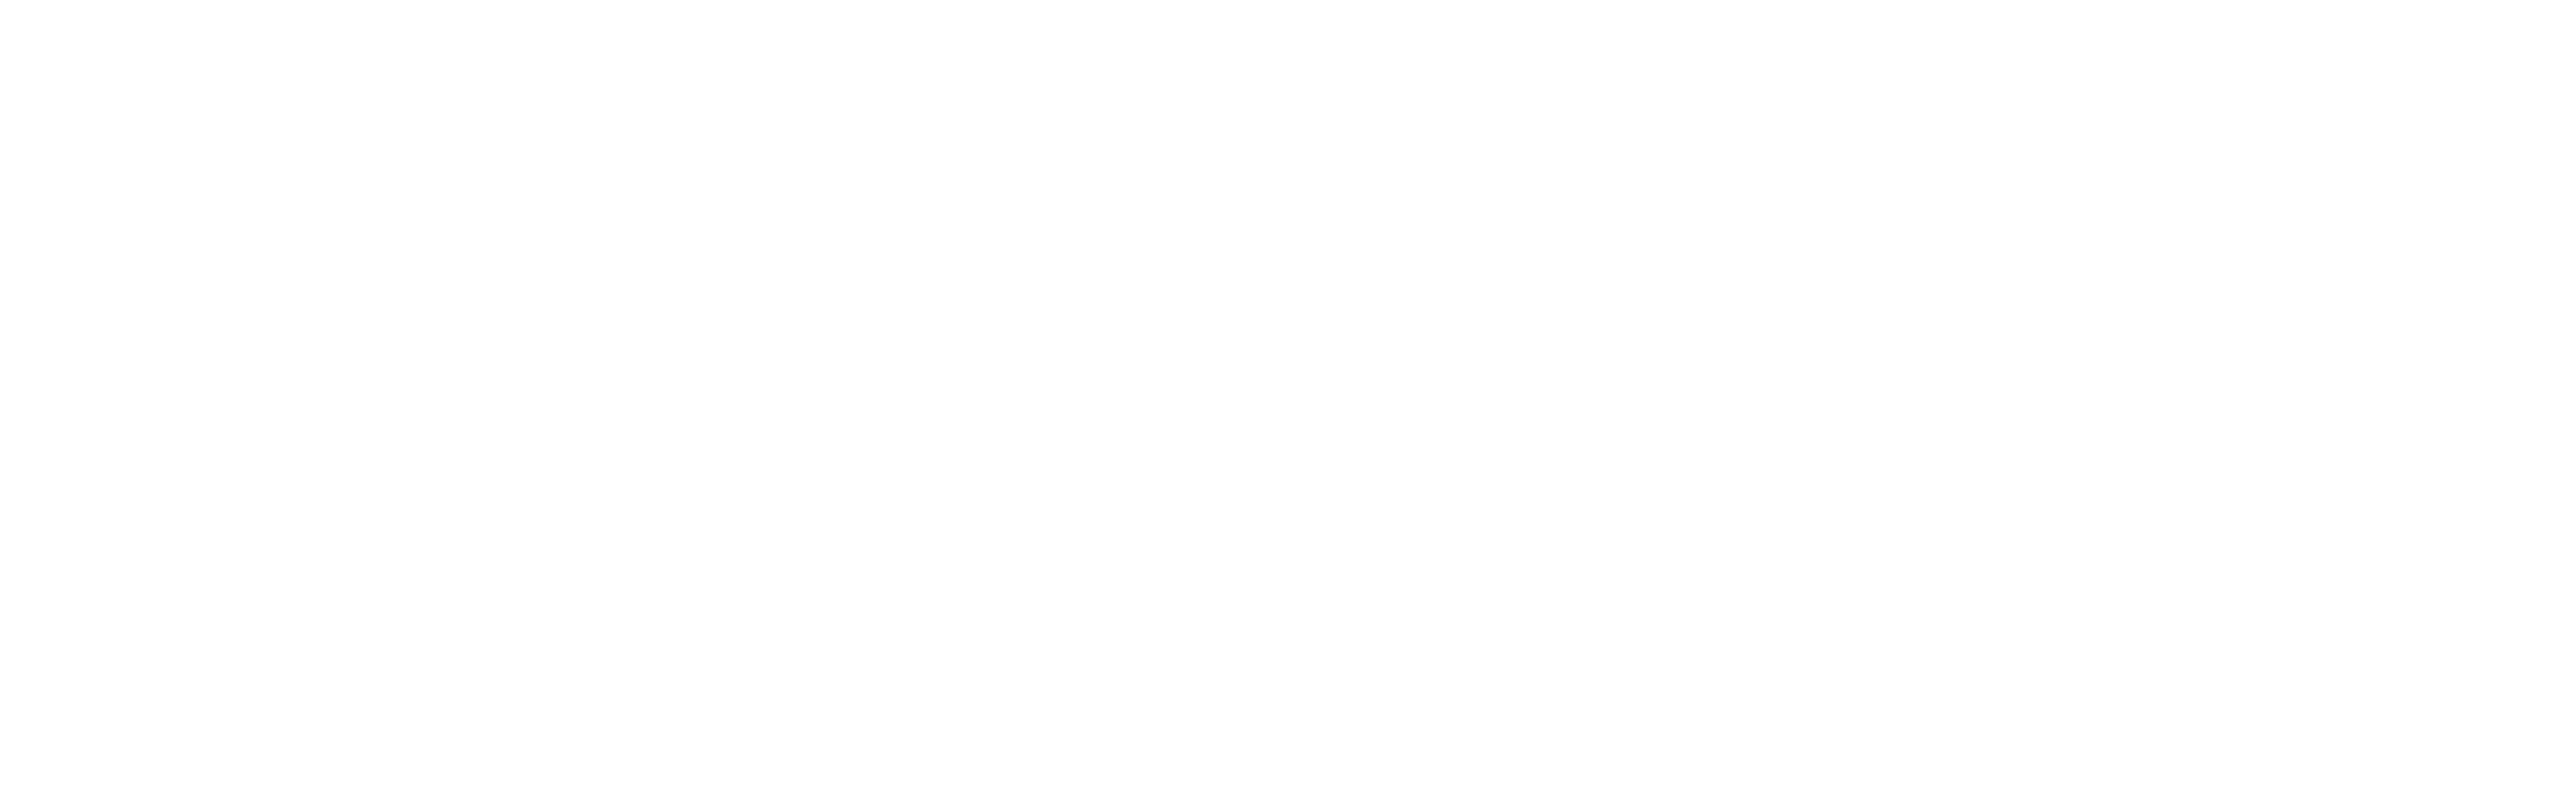 Castrum Capital